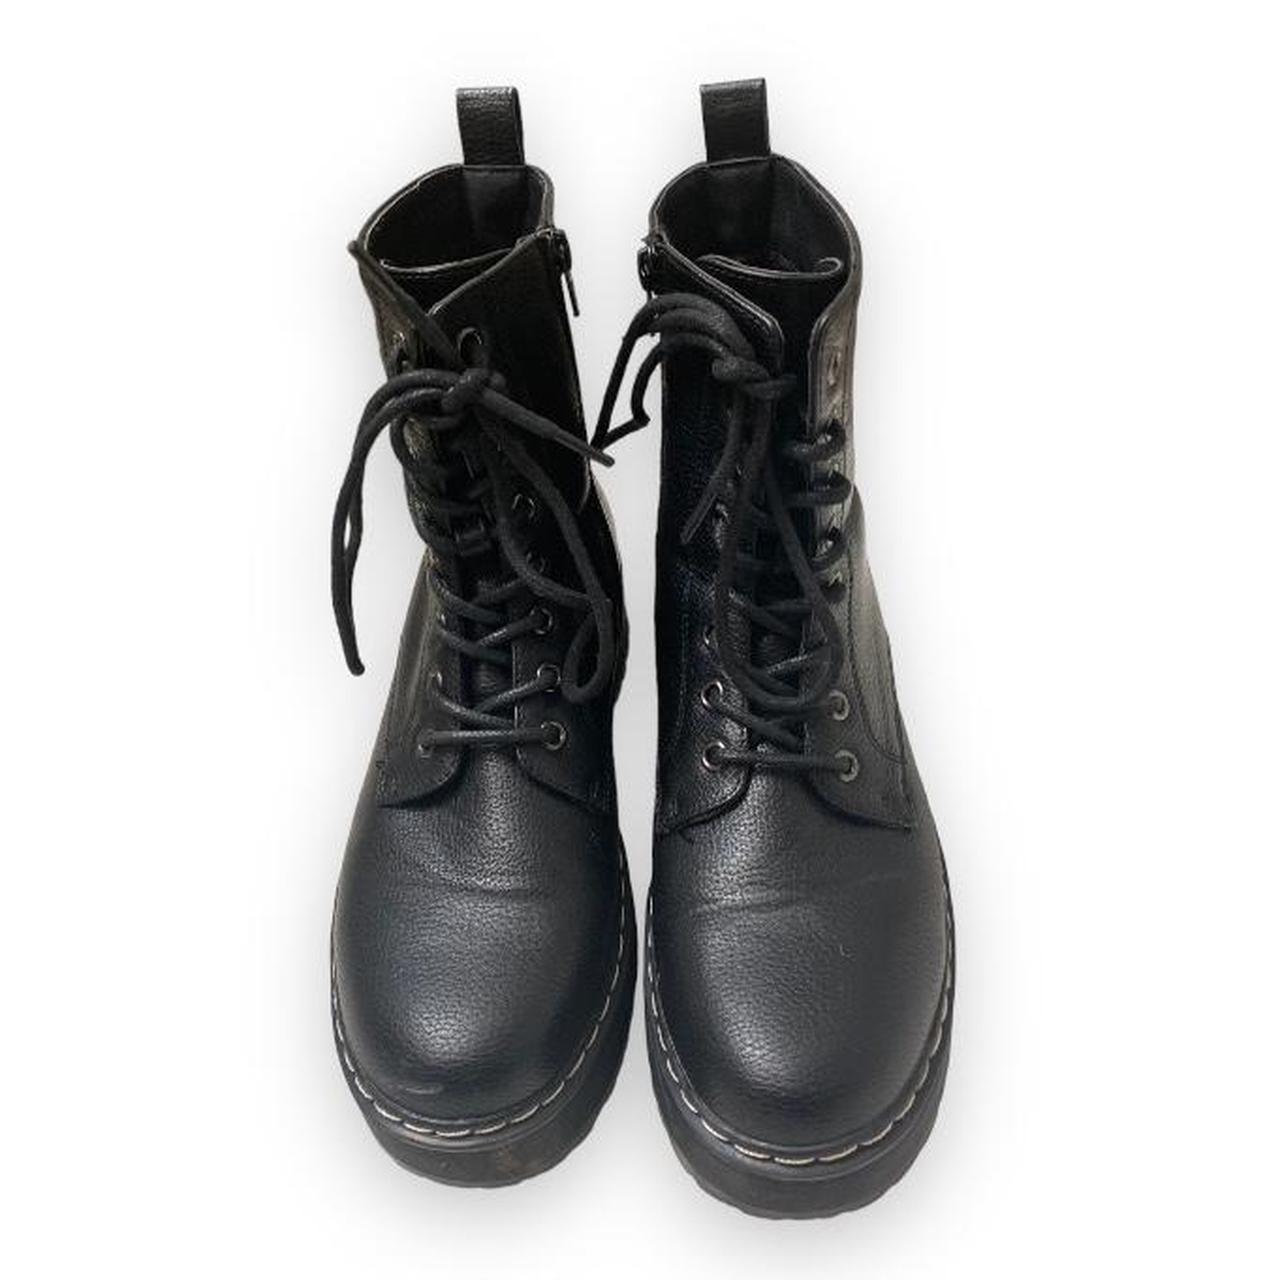 Union Bay boots ꔫ ꔫ perfect condition, slight... - Depop